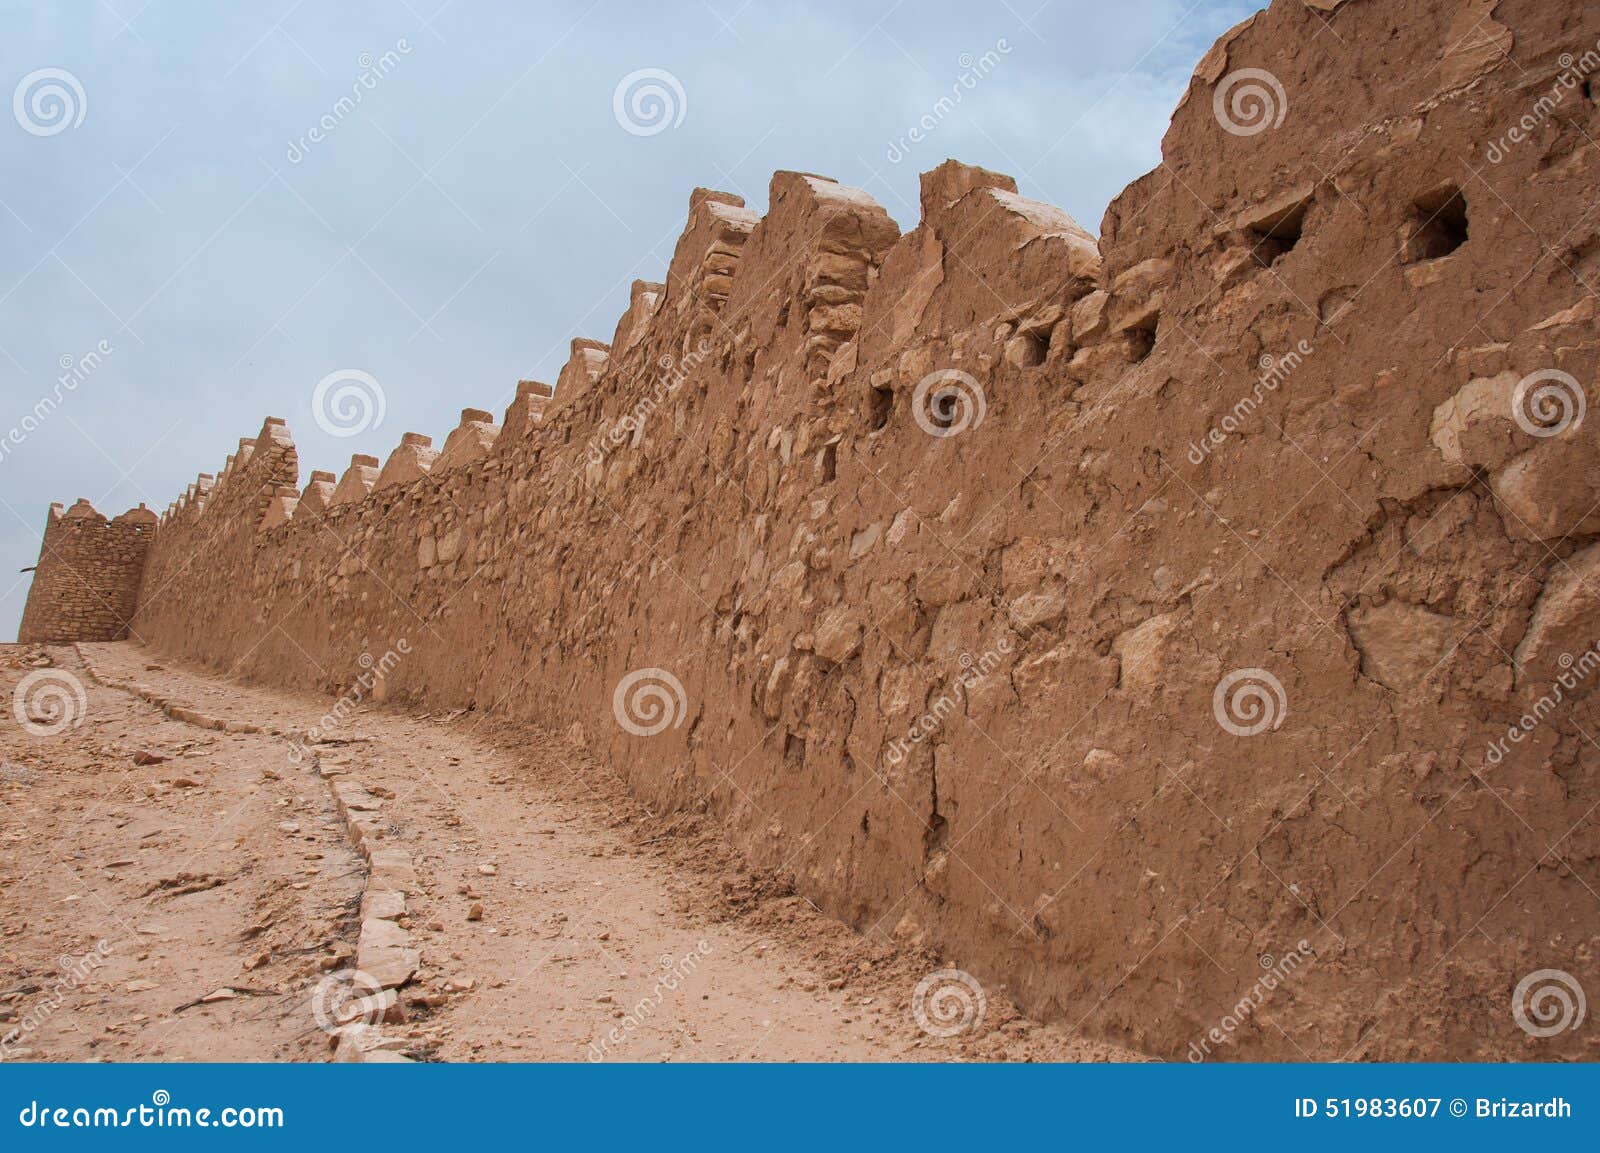 walls of old at-turaif district near ad diriyah, saudi arabia